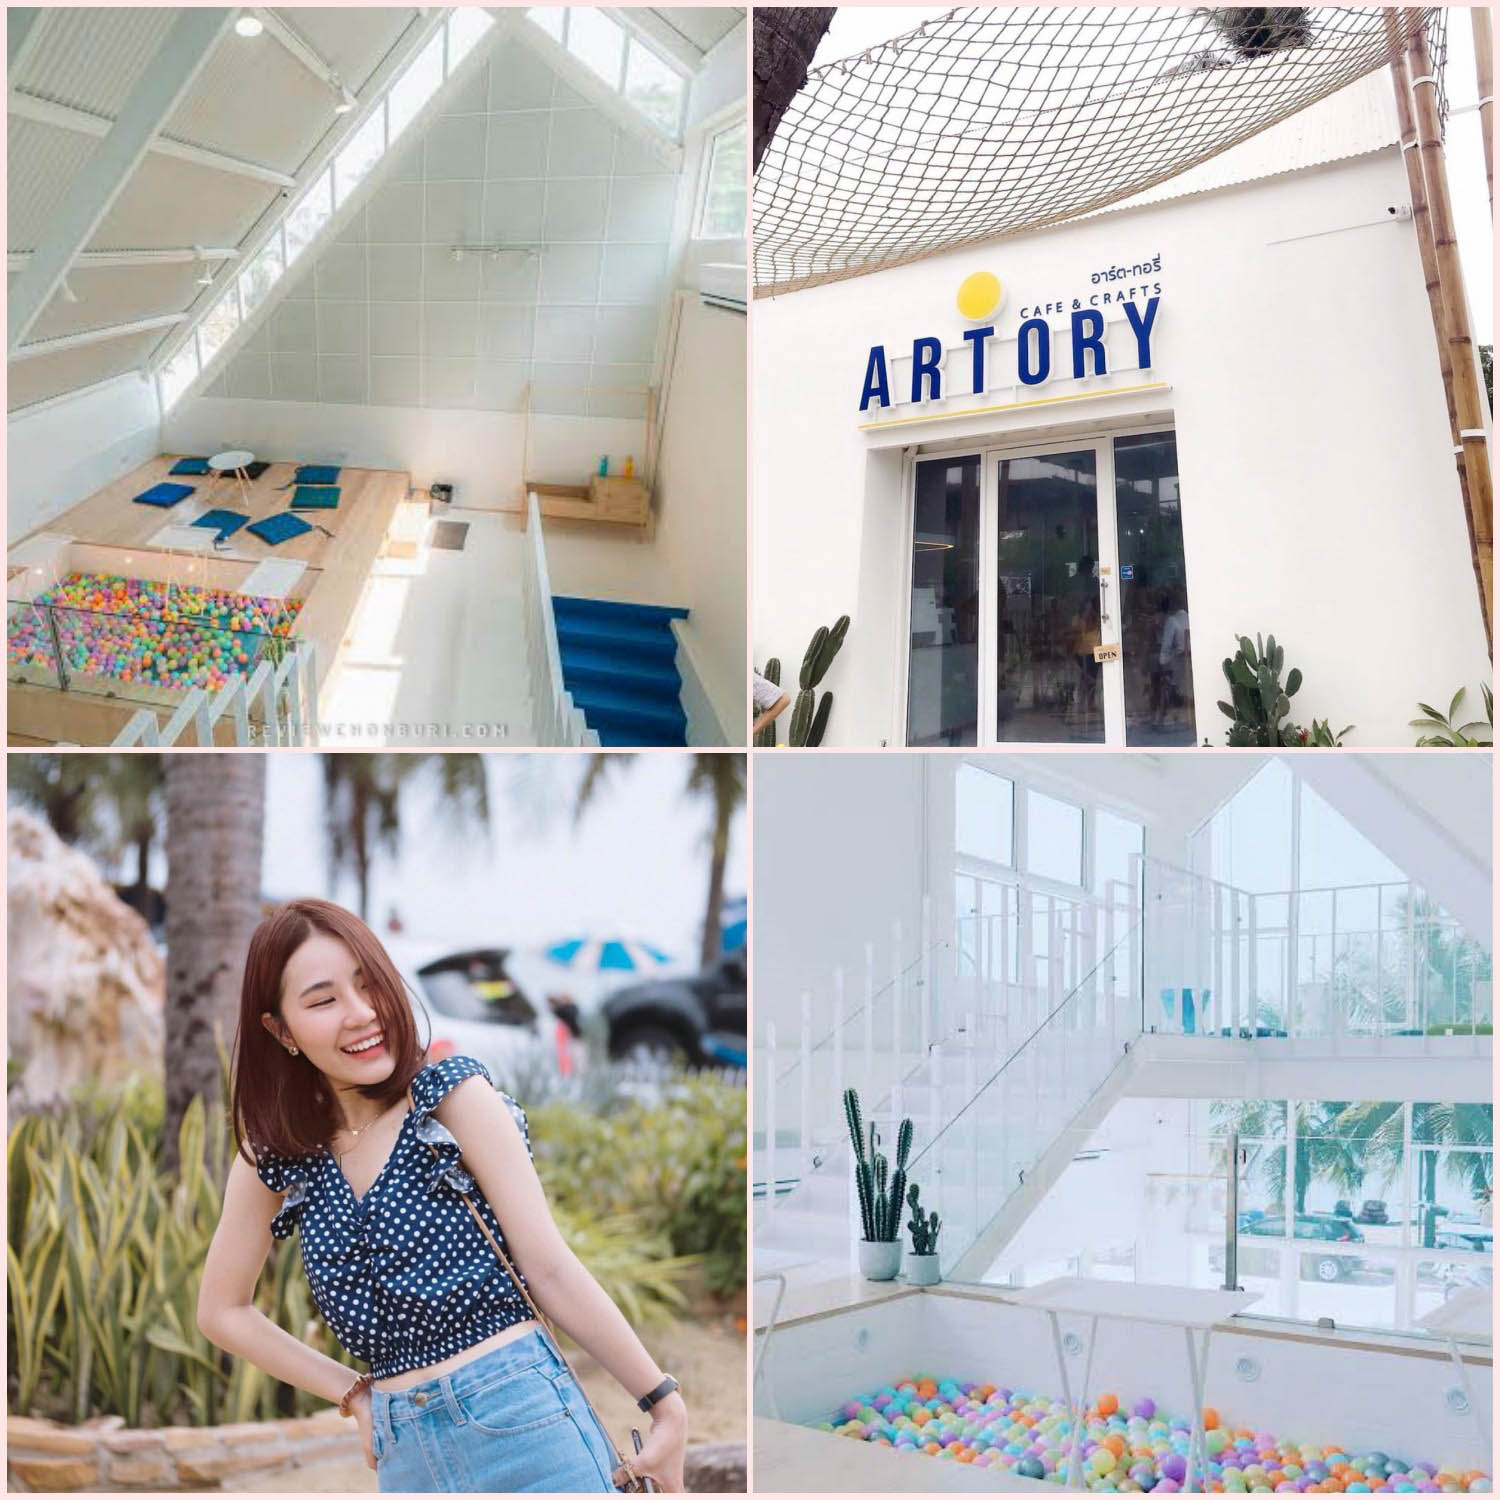 Artory Cafe Crafts คาเฟ่ชลบุรี บางแสน วิวหลักล้าน ร้านสวยสุดฟินกับโทนร้านขาวมินิมอลชิวๆชิคๆ ริมหาดวอนนภา บางแสน